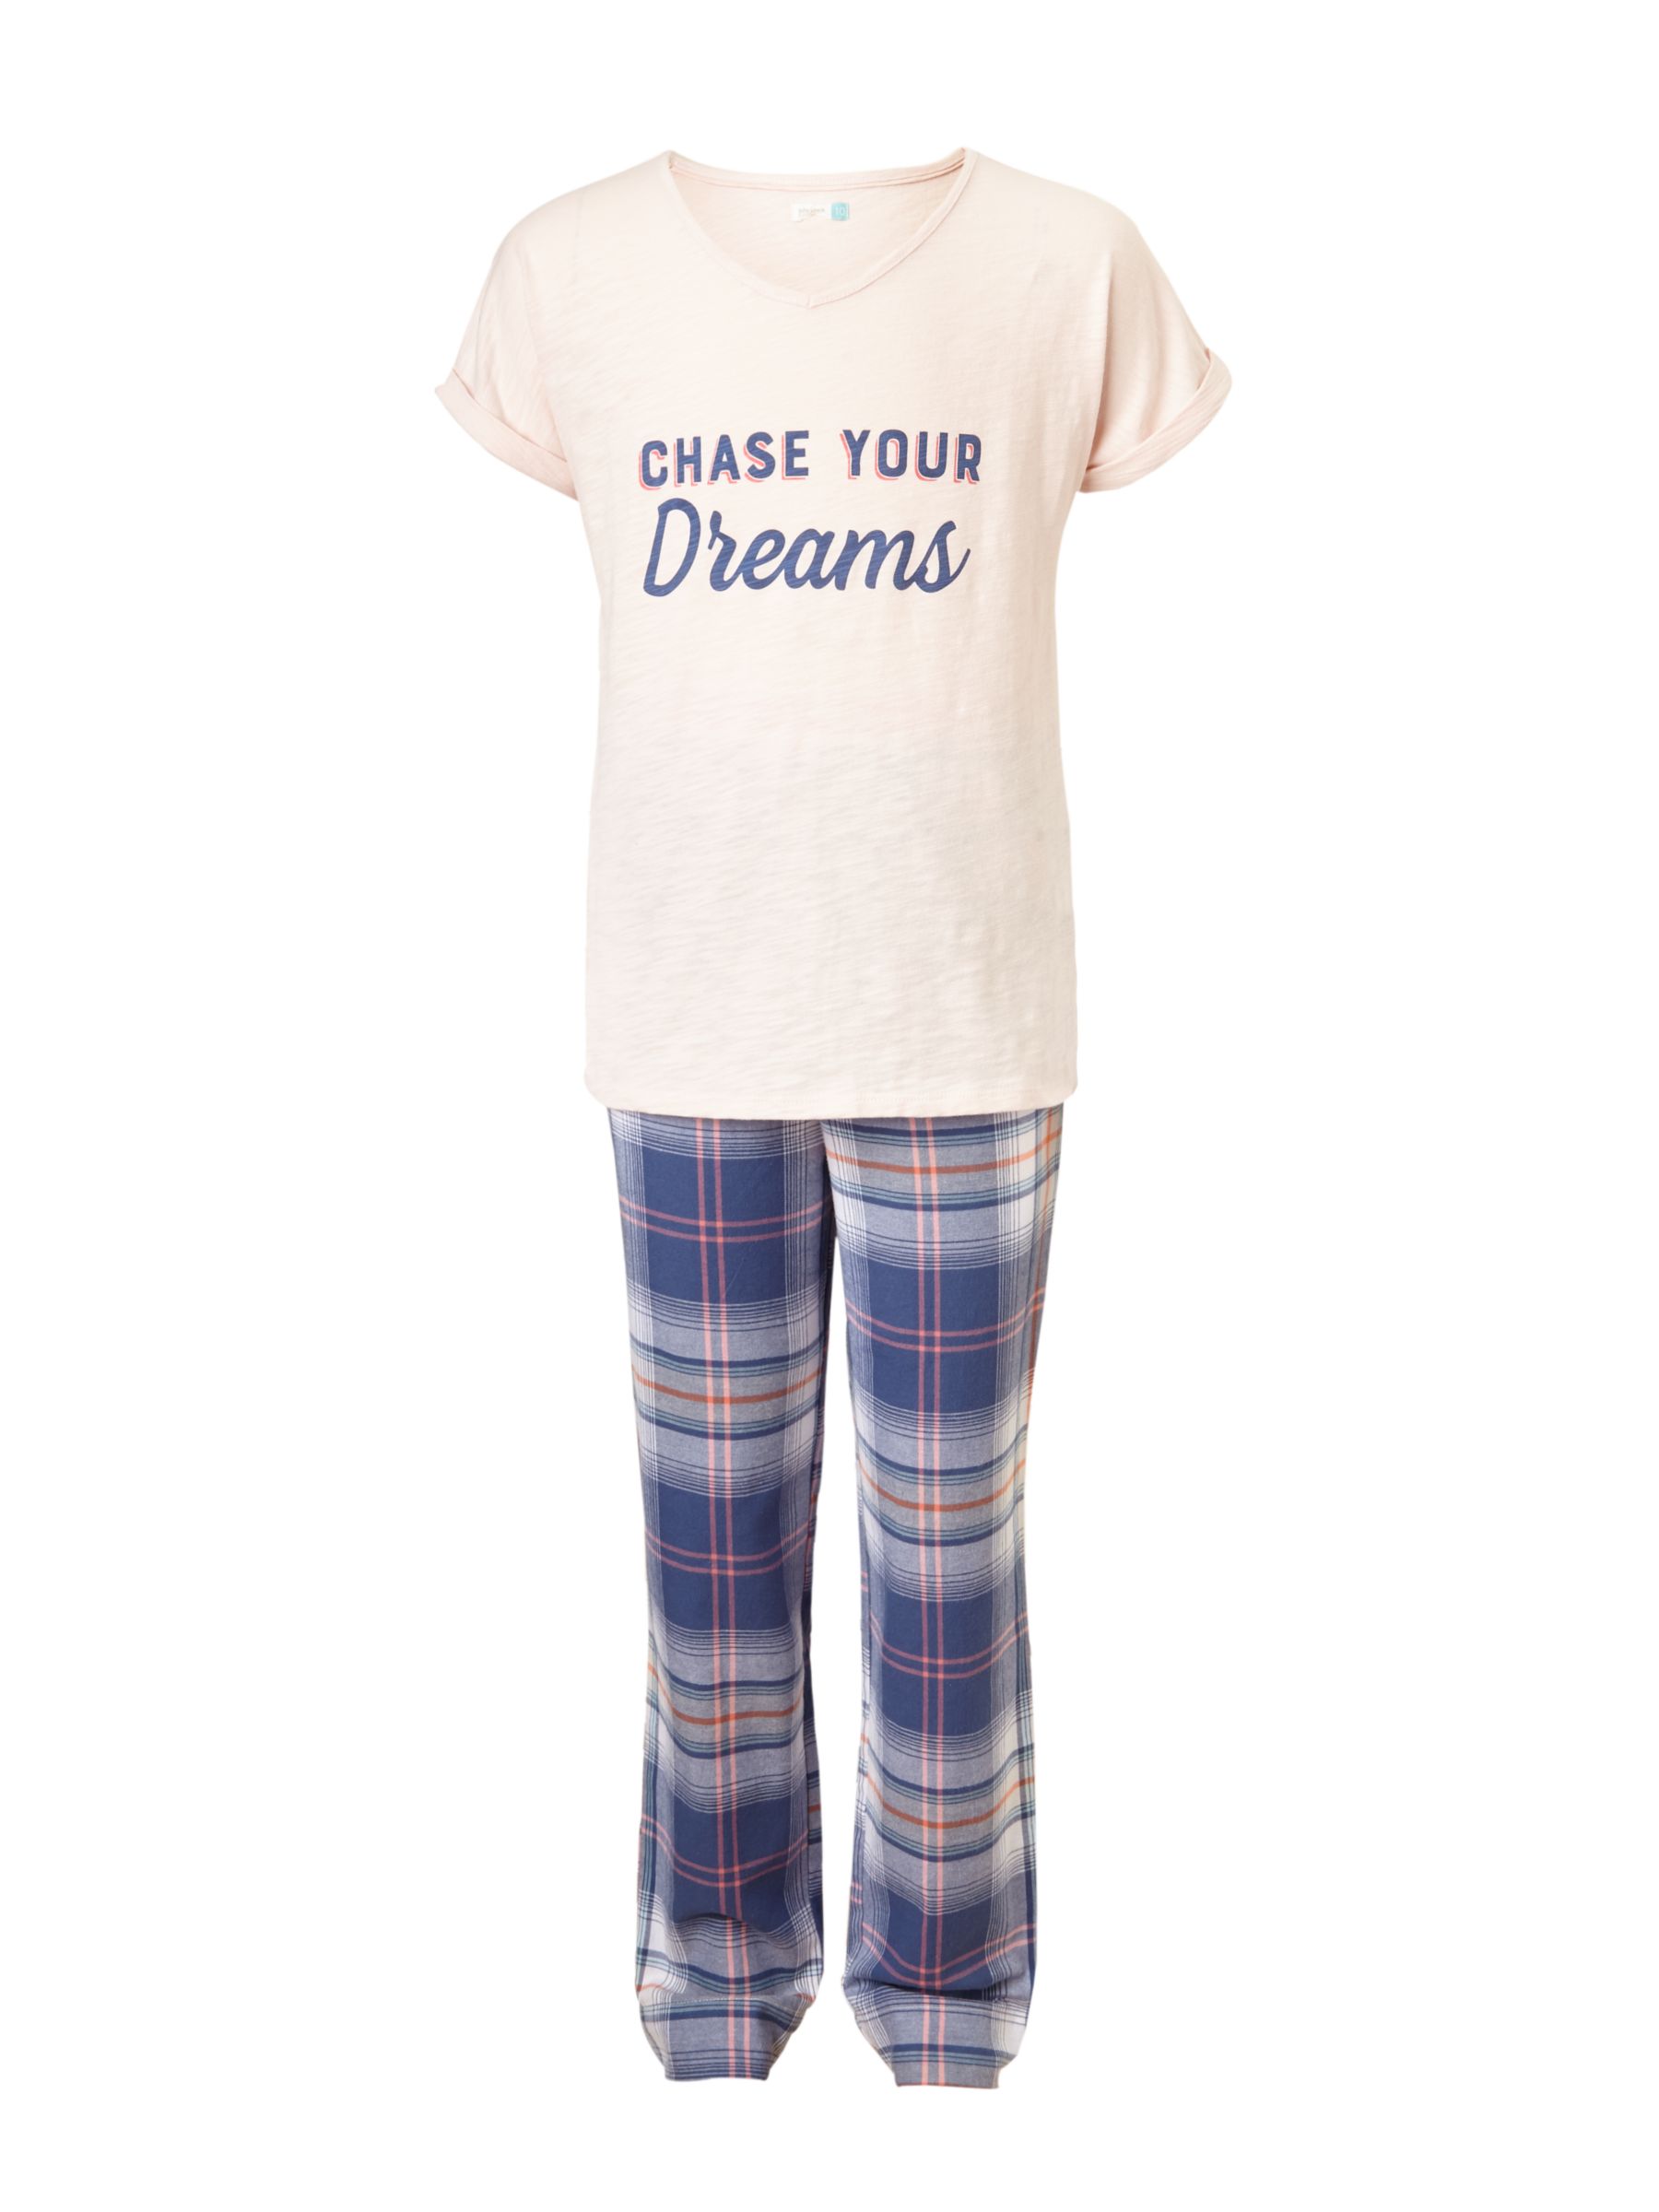 John Lewis Children's Dreams T-Shirt Pyjamas Review